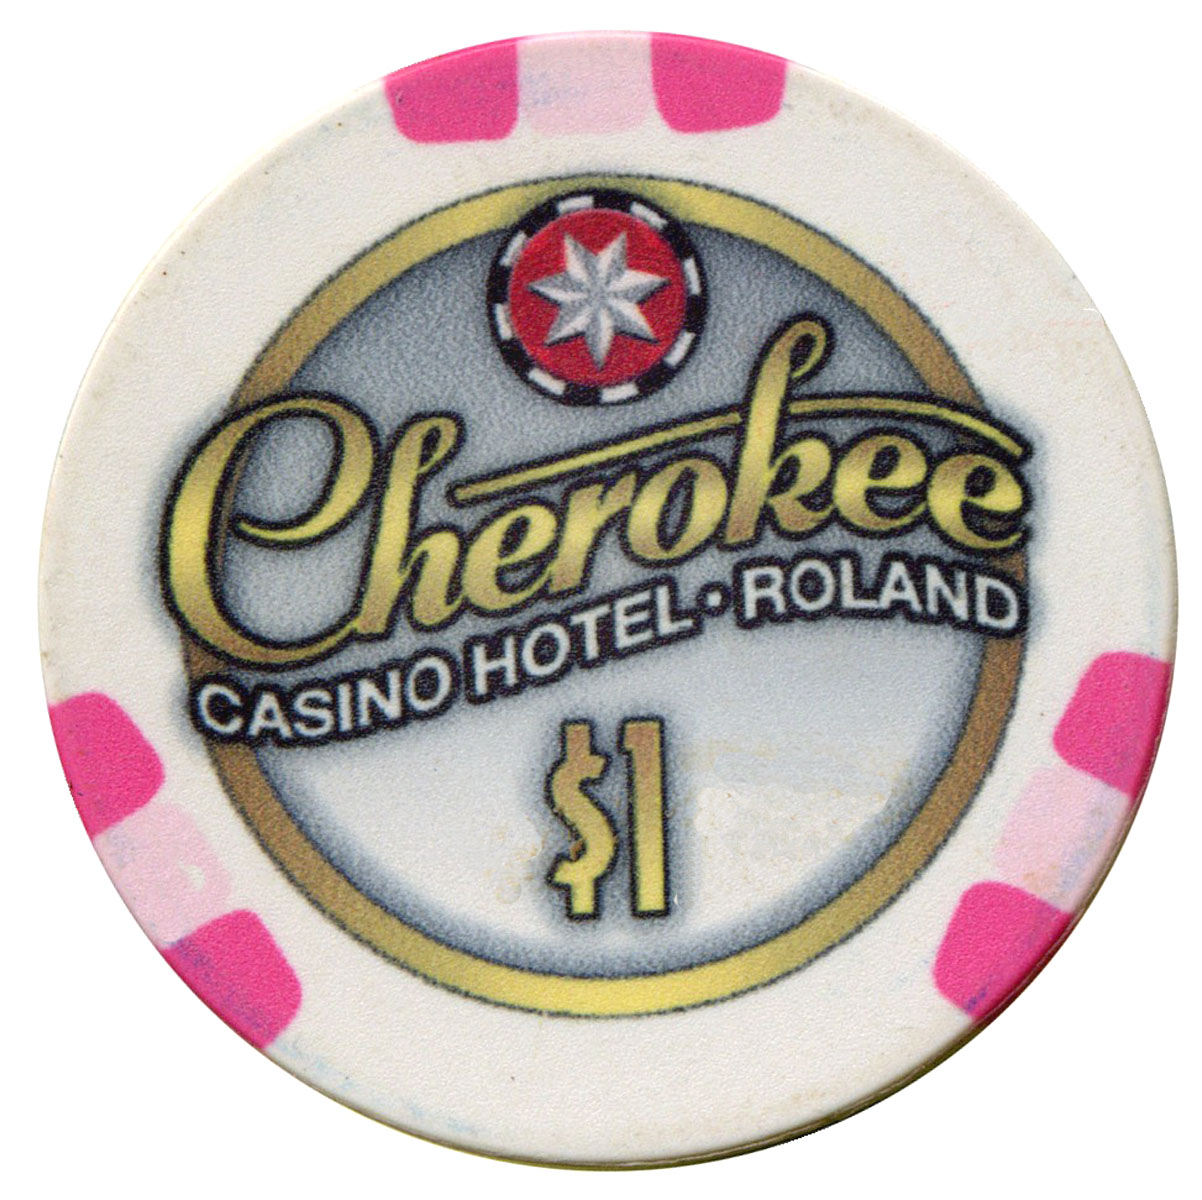 cherokee casino roland grab and go